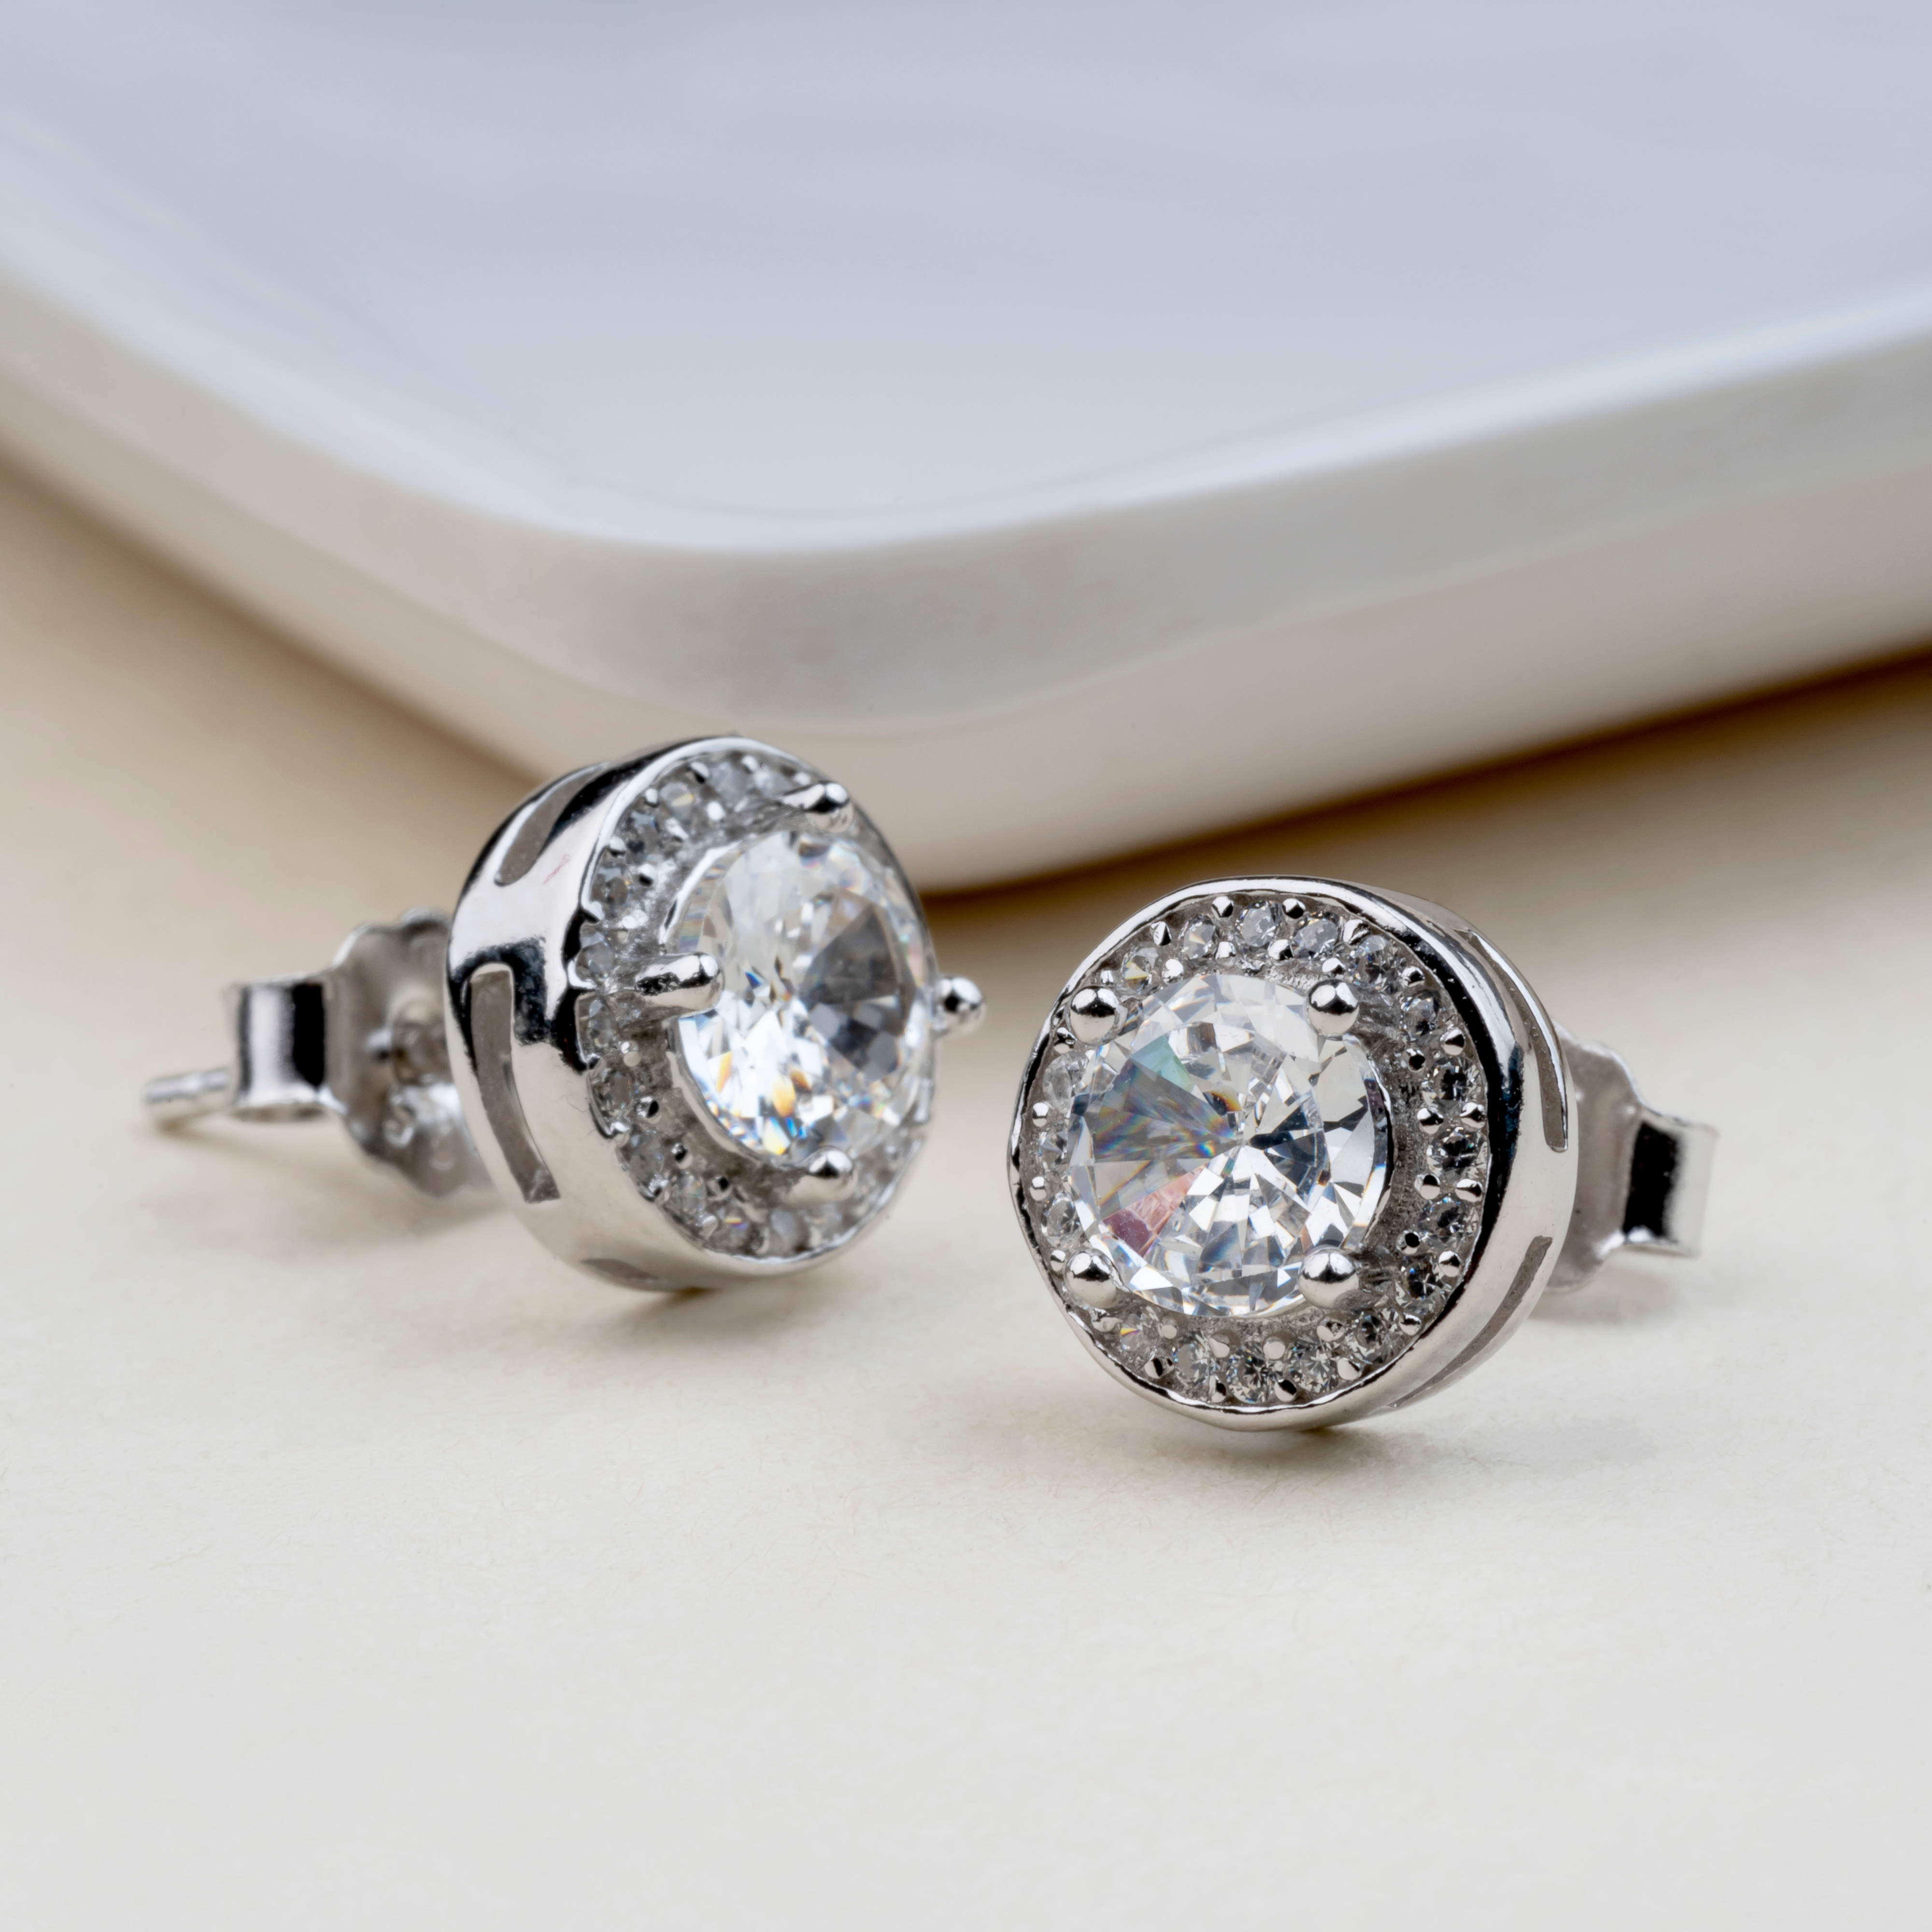 Ruby and American Diamond Stud Earrings in Sterling Silver